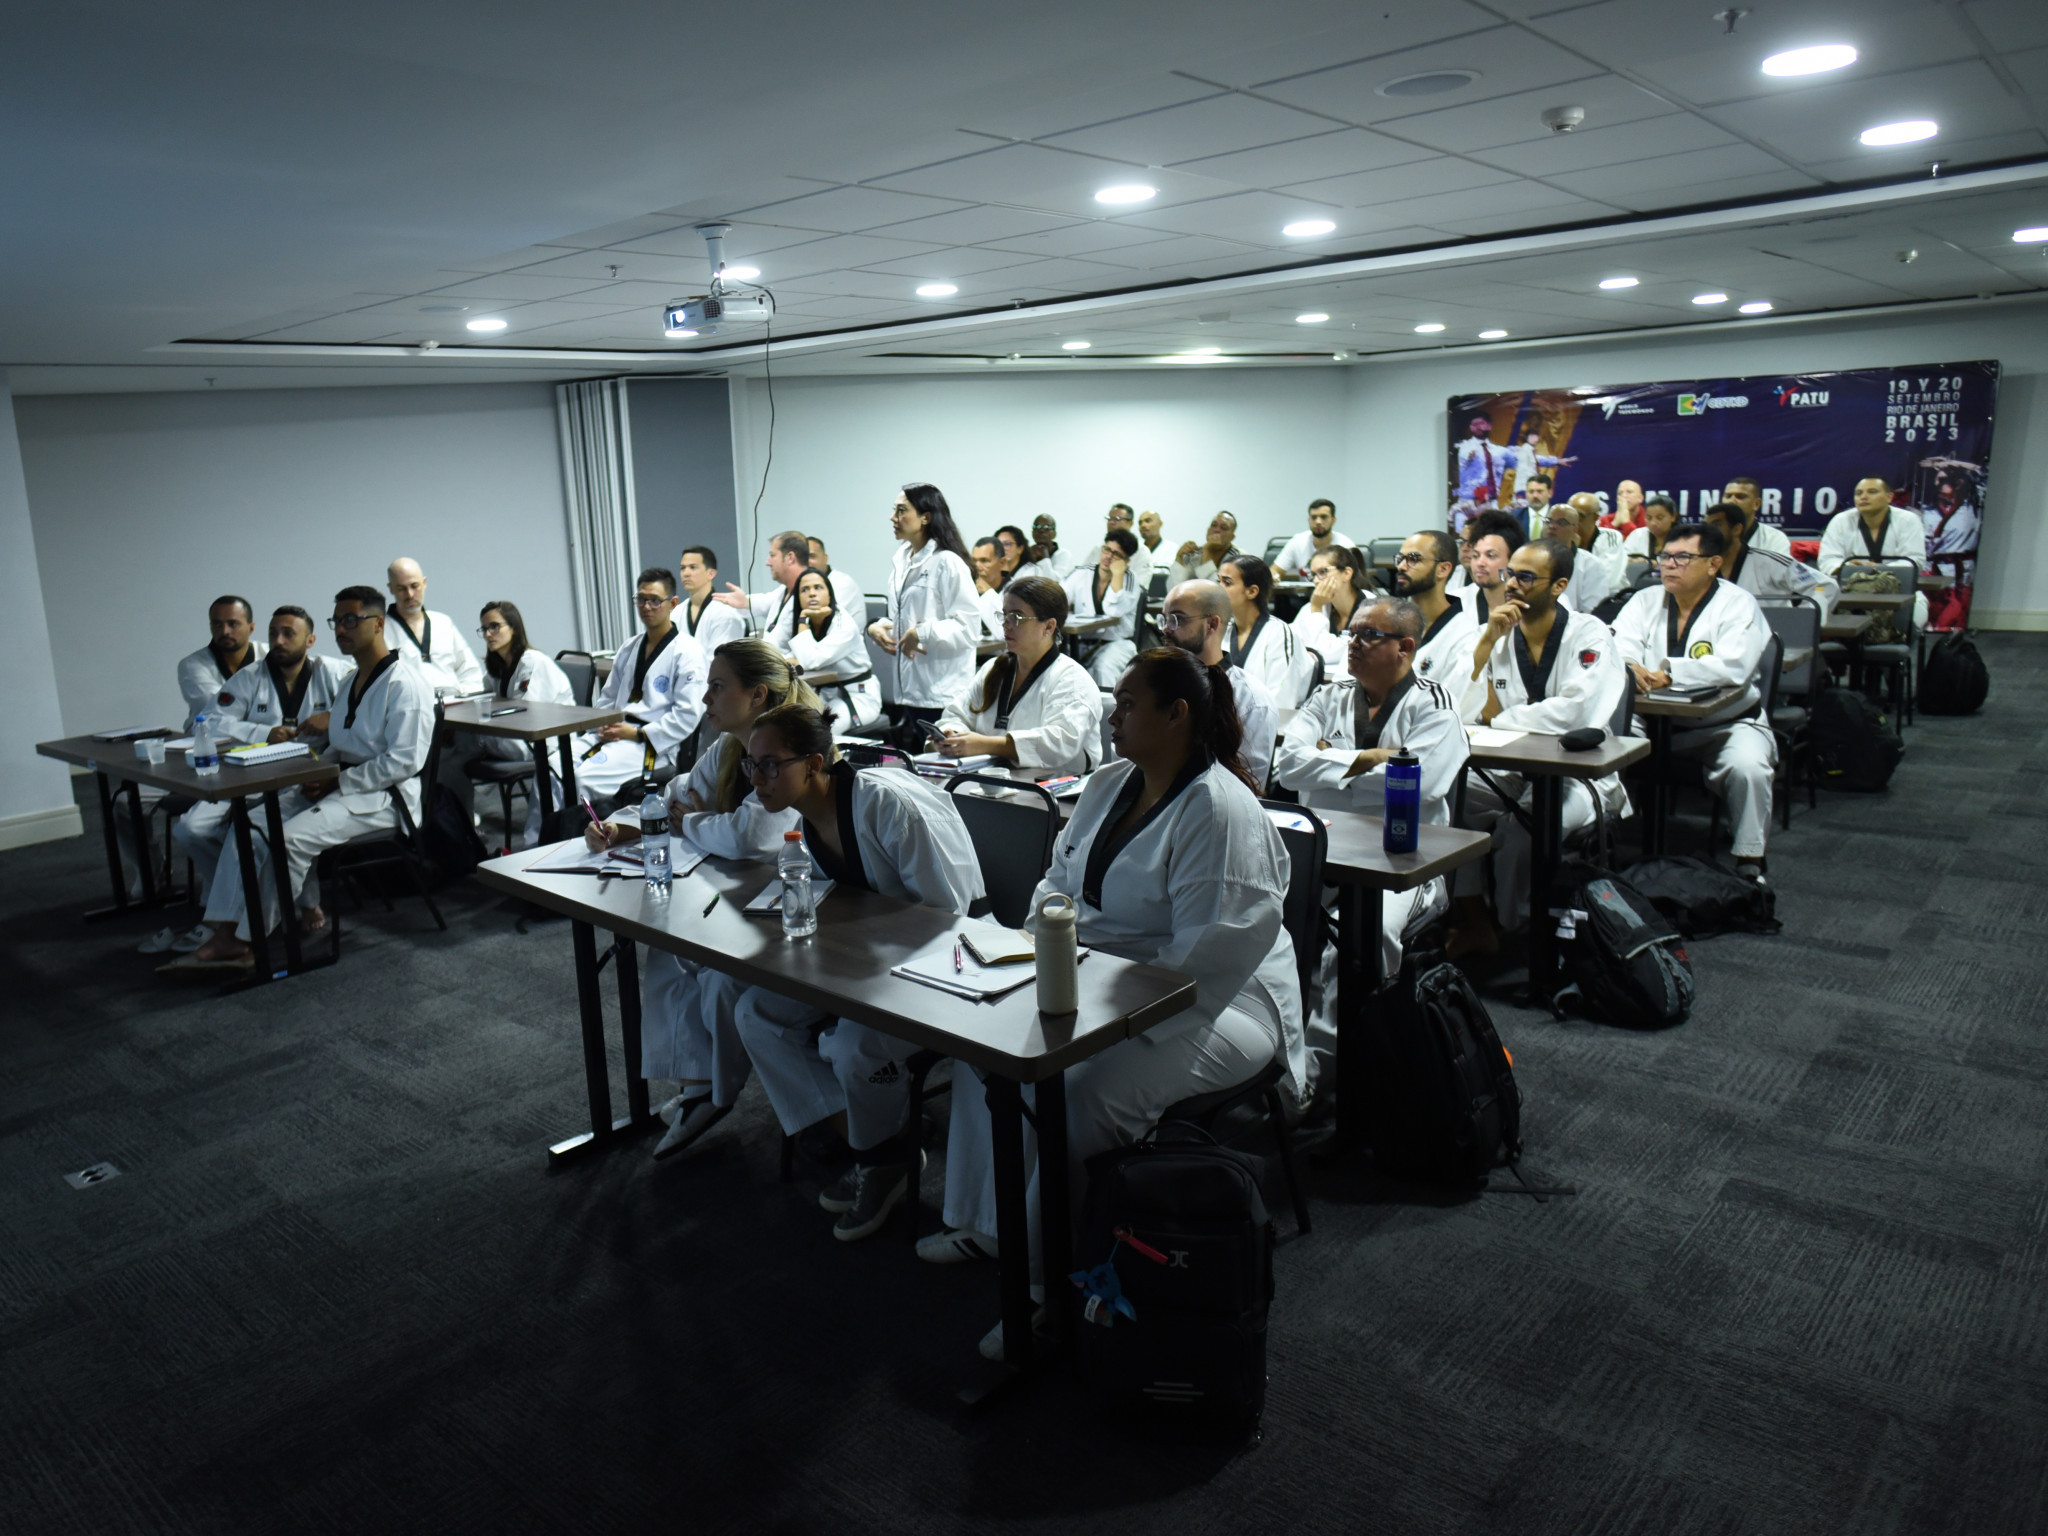 More than 50 taekwondo judges took part in a two-day training course in Rio de Janeiro ©PATU